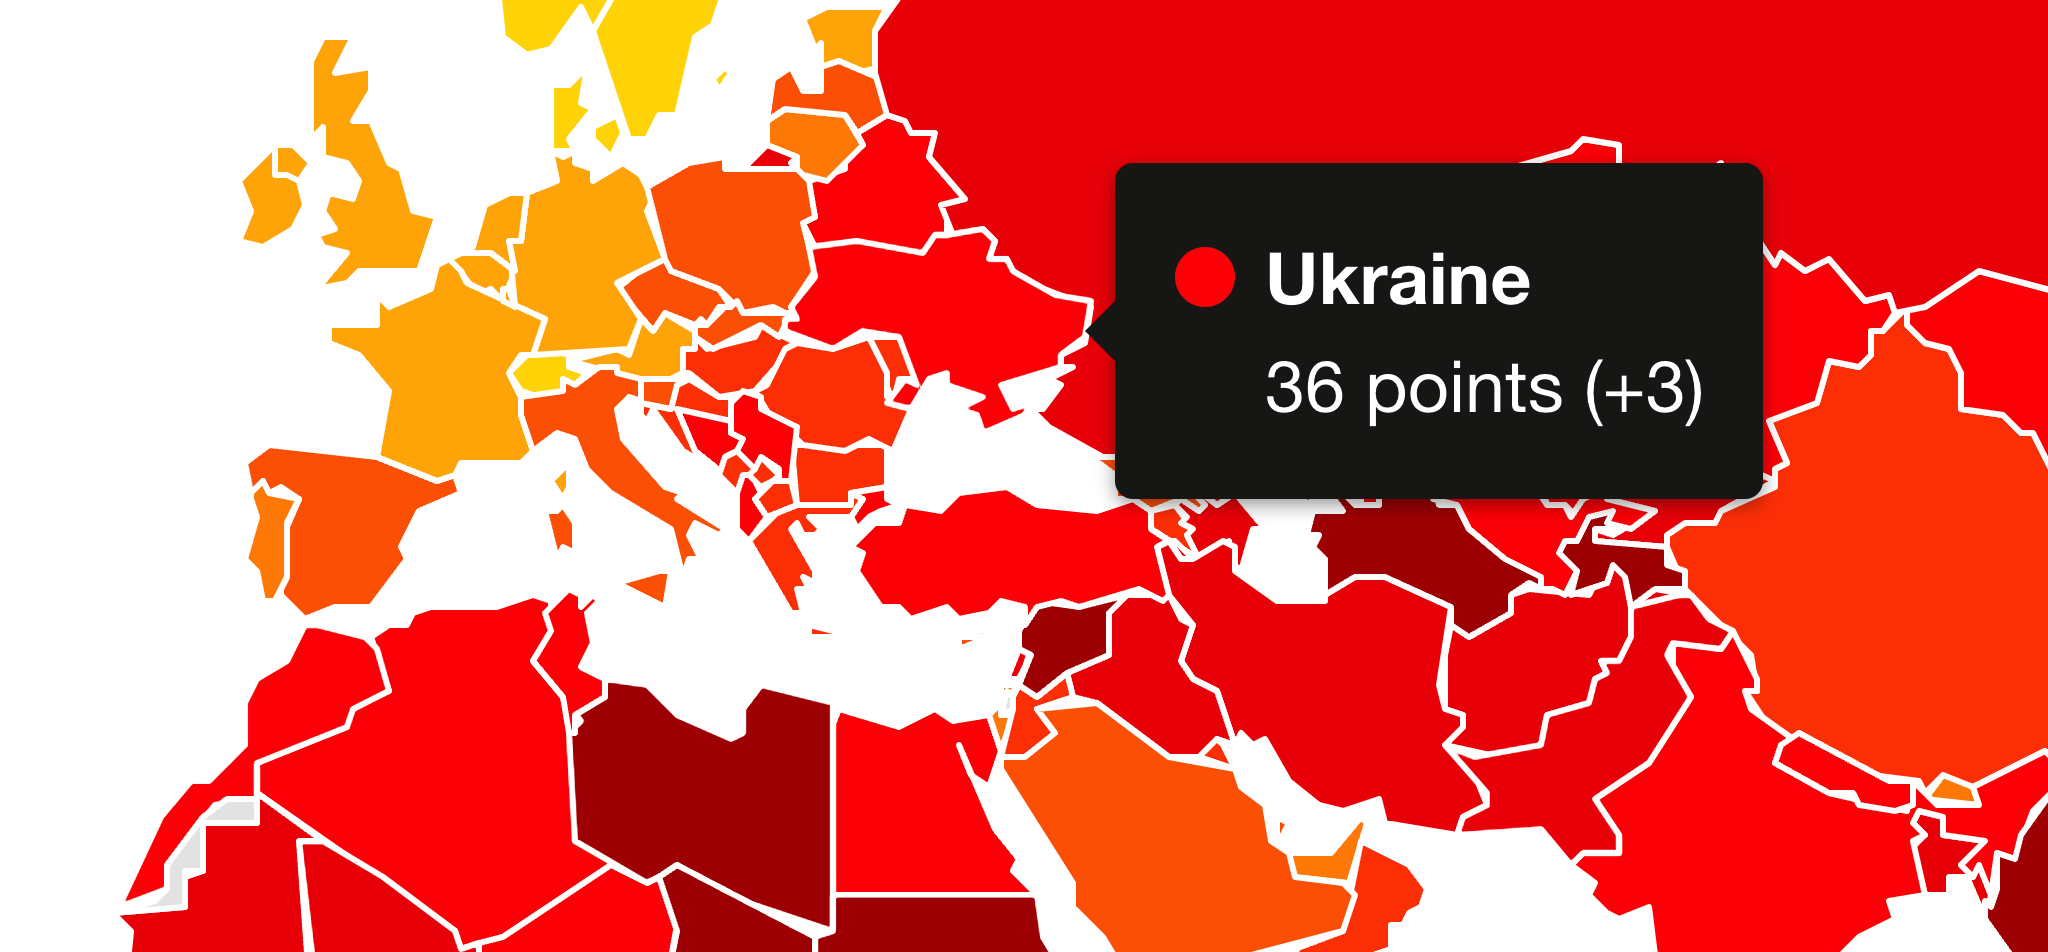 Corruption fight ranking: Ukraine one of the best